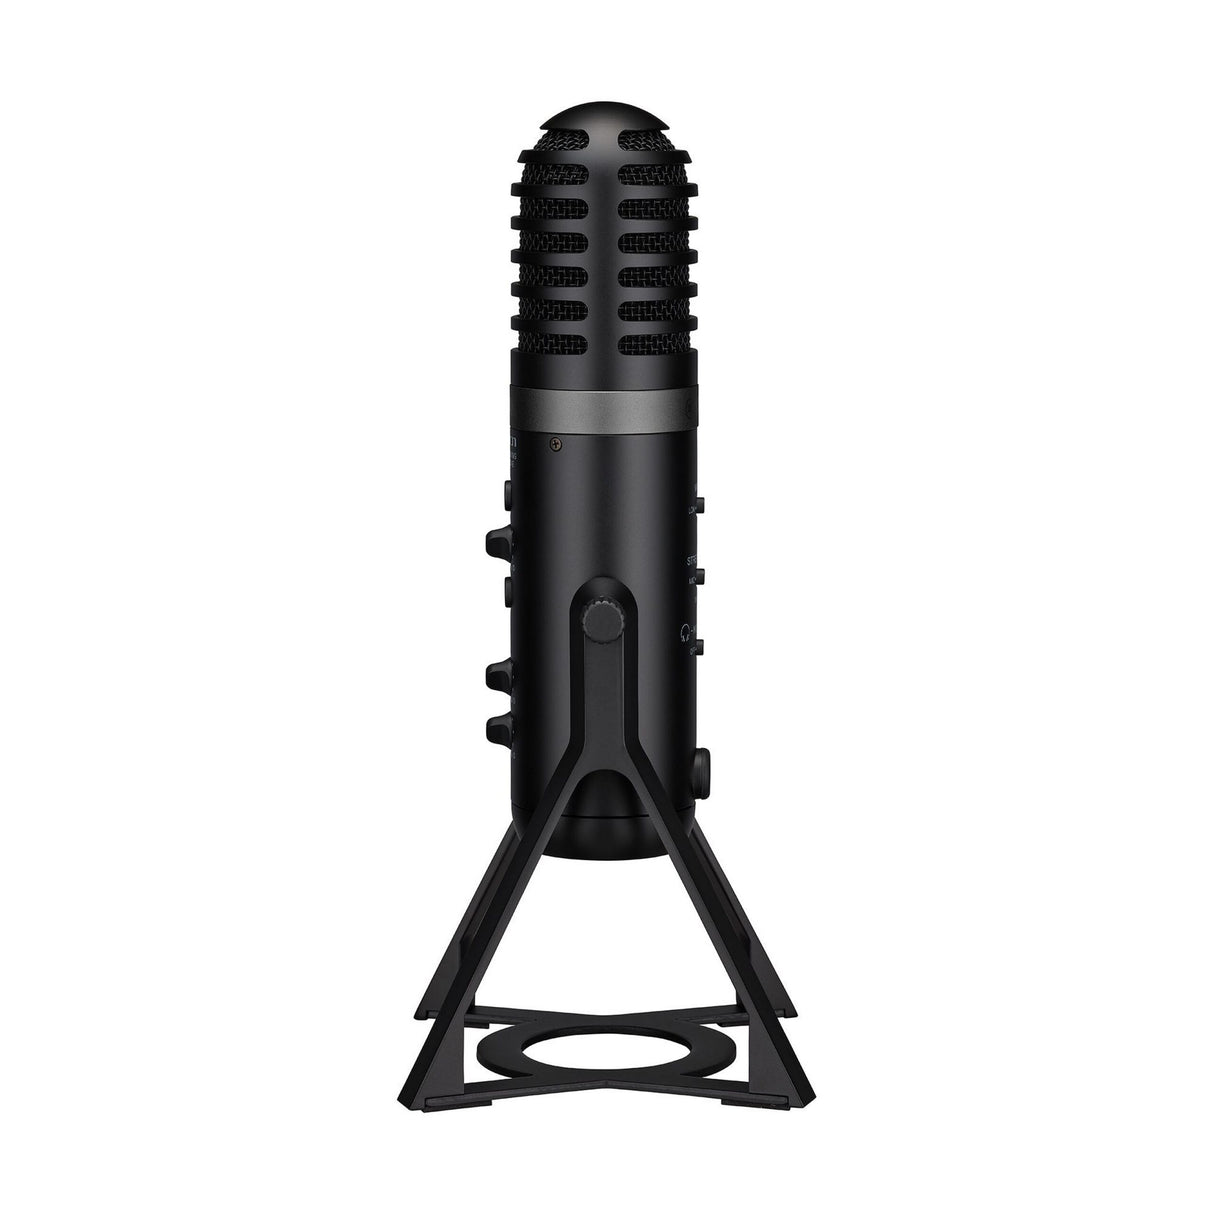 Yamaha AG01 Streaming USB Microphone, Black